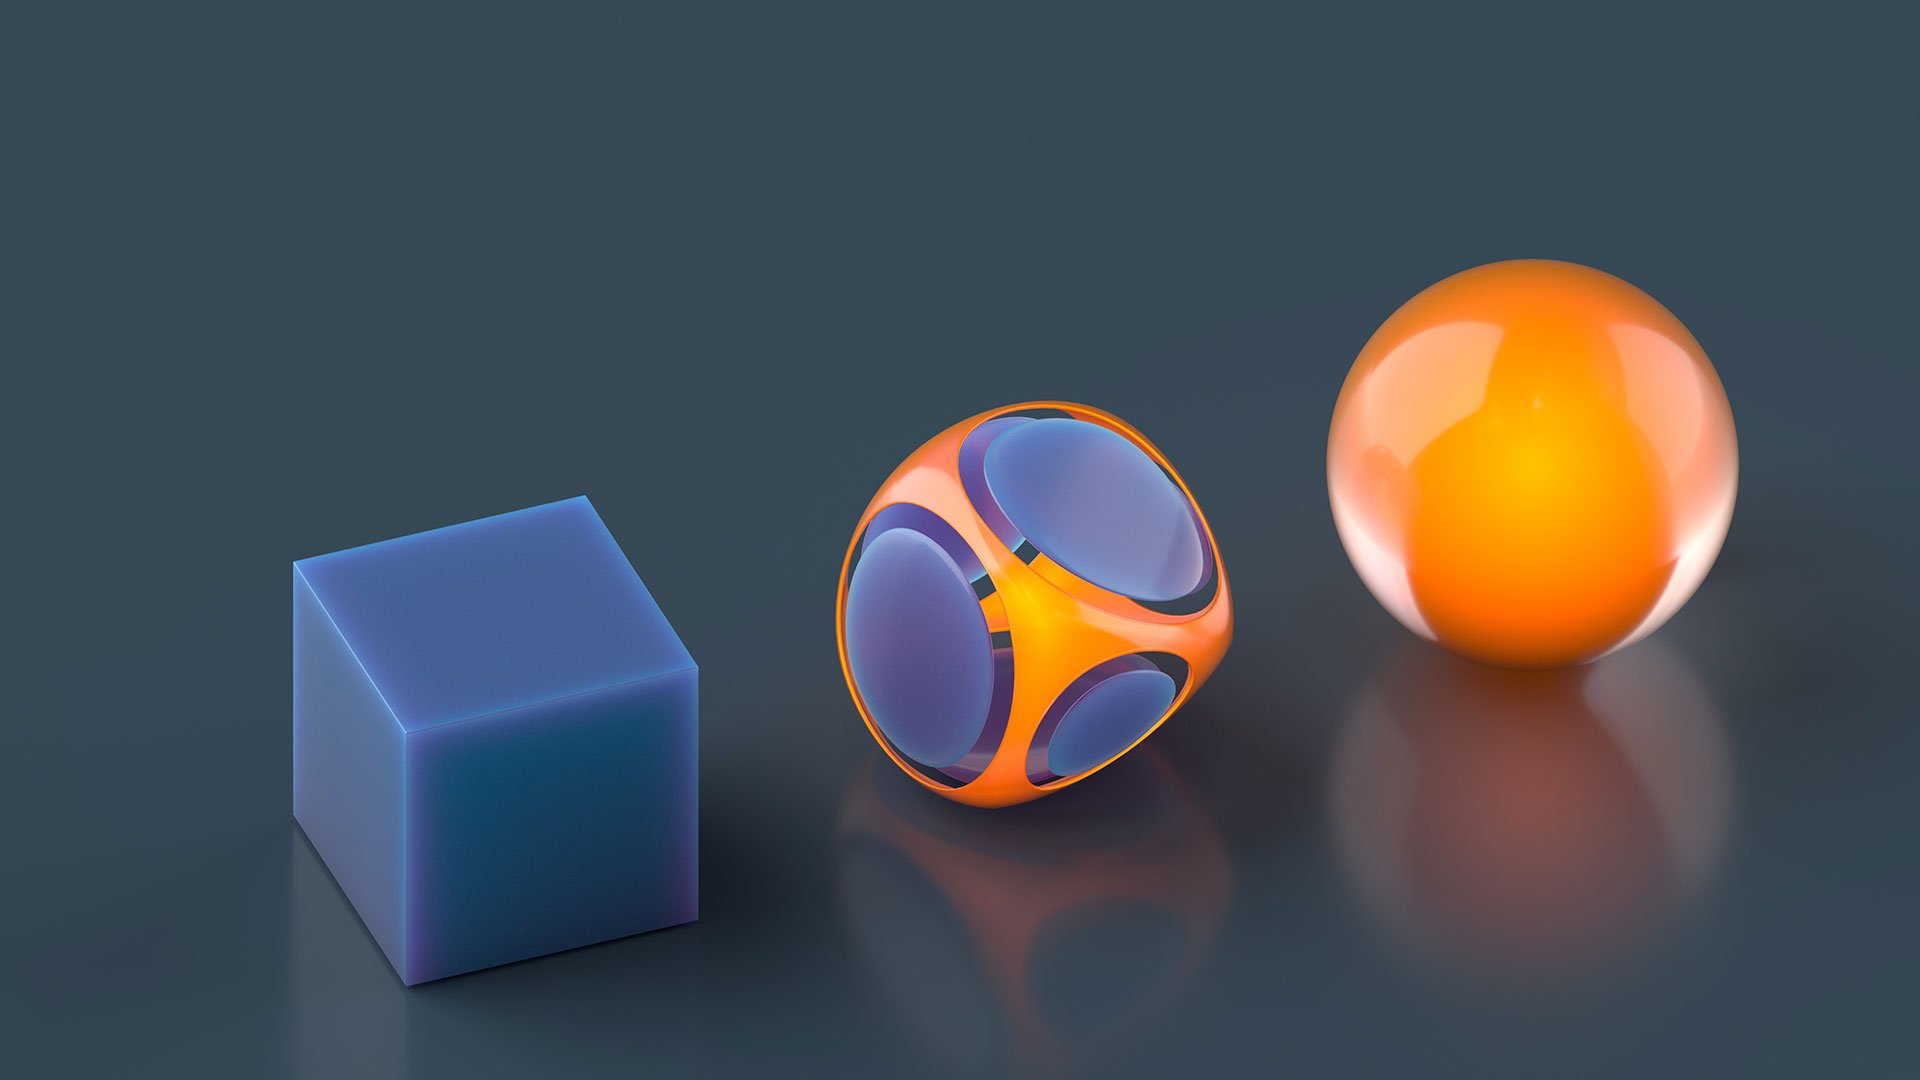 ESMT annual forum key visual: cube, dice, and circle